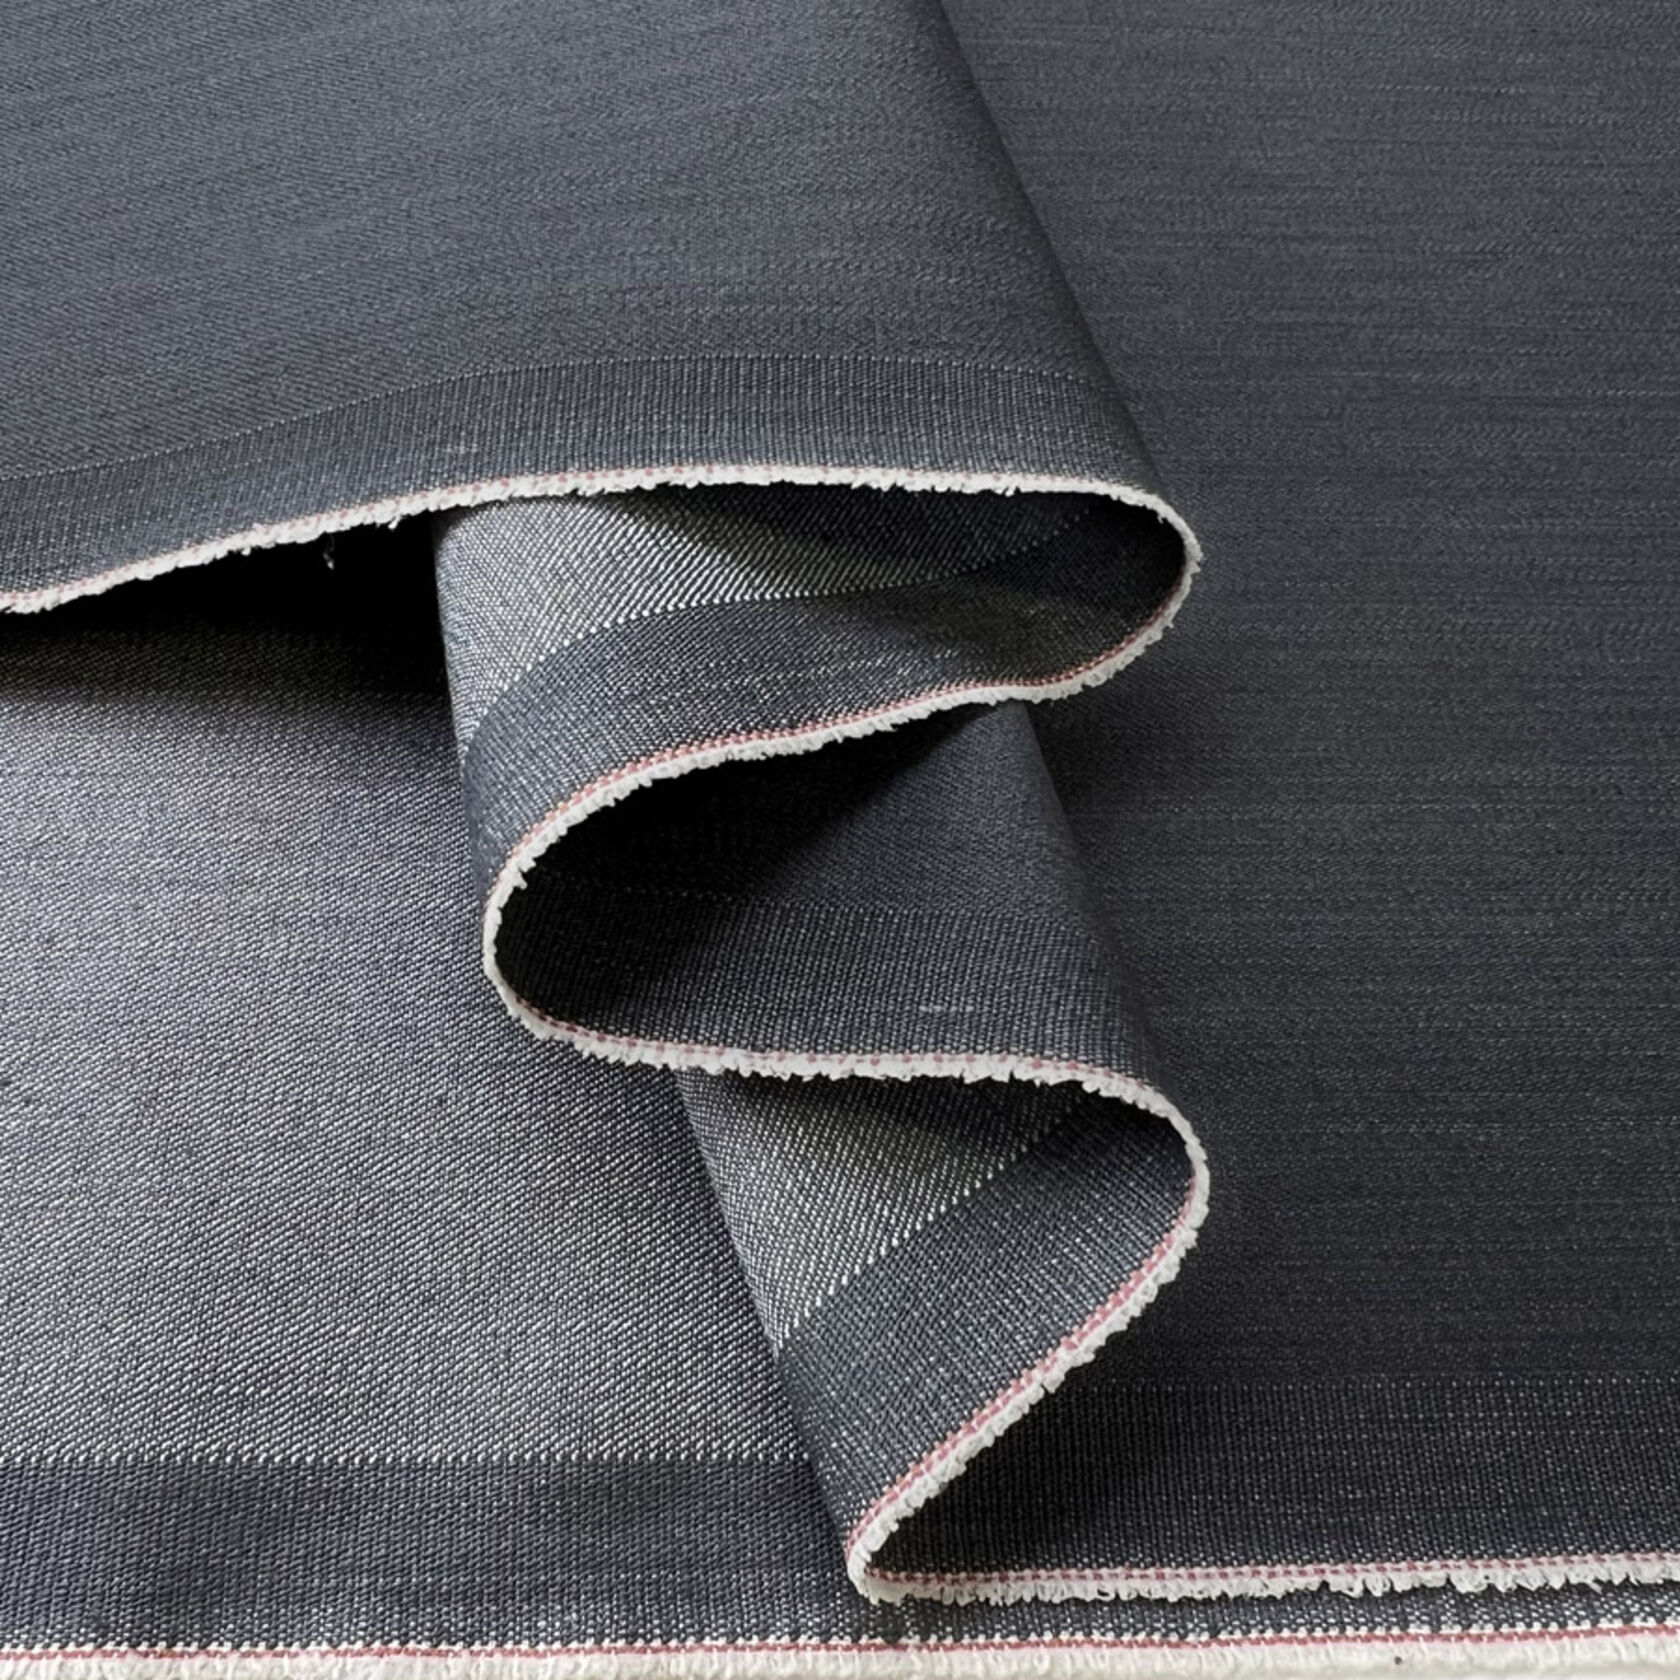 10oz Premium Cotton Spandex Stretch Woven Denim Fabric - ZEVA DENIM